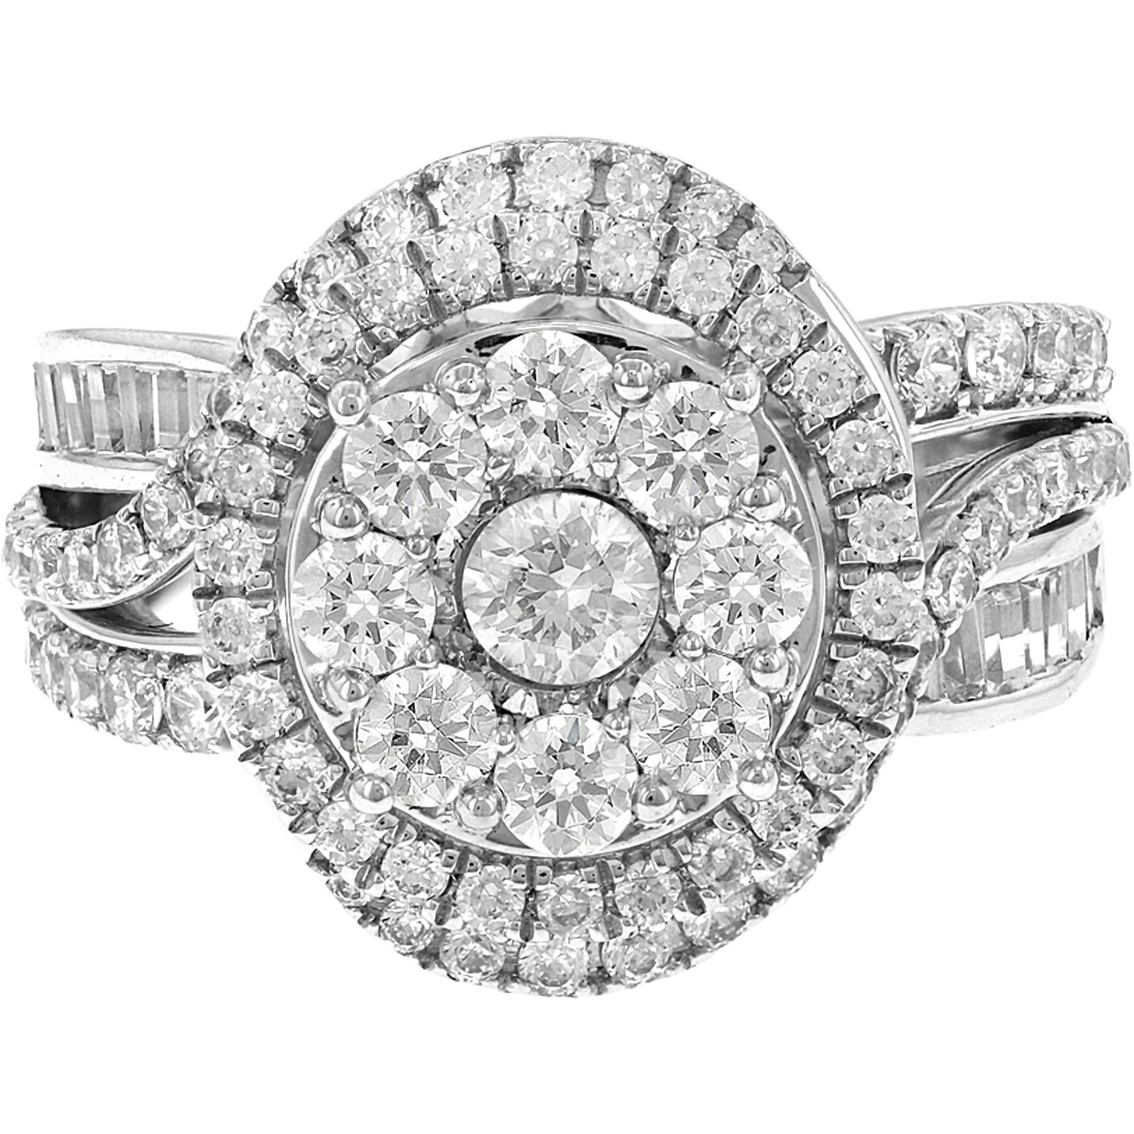 10K White Gold 2 CTW Diamond Ring, Size 7 - Image 4 of 4